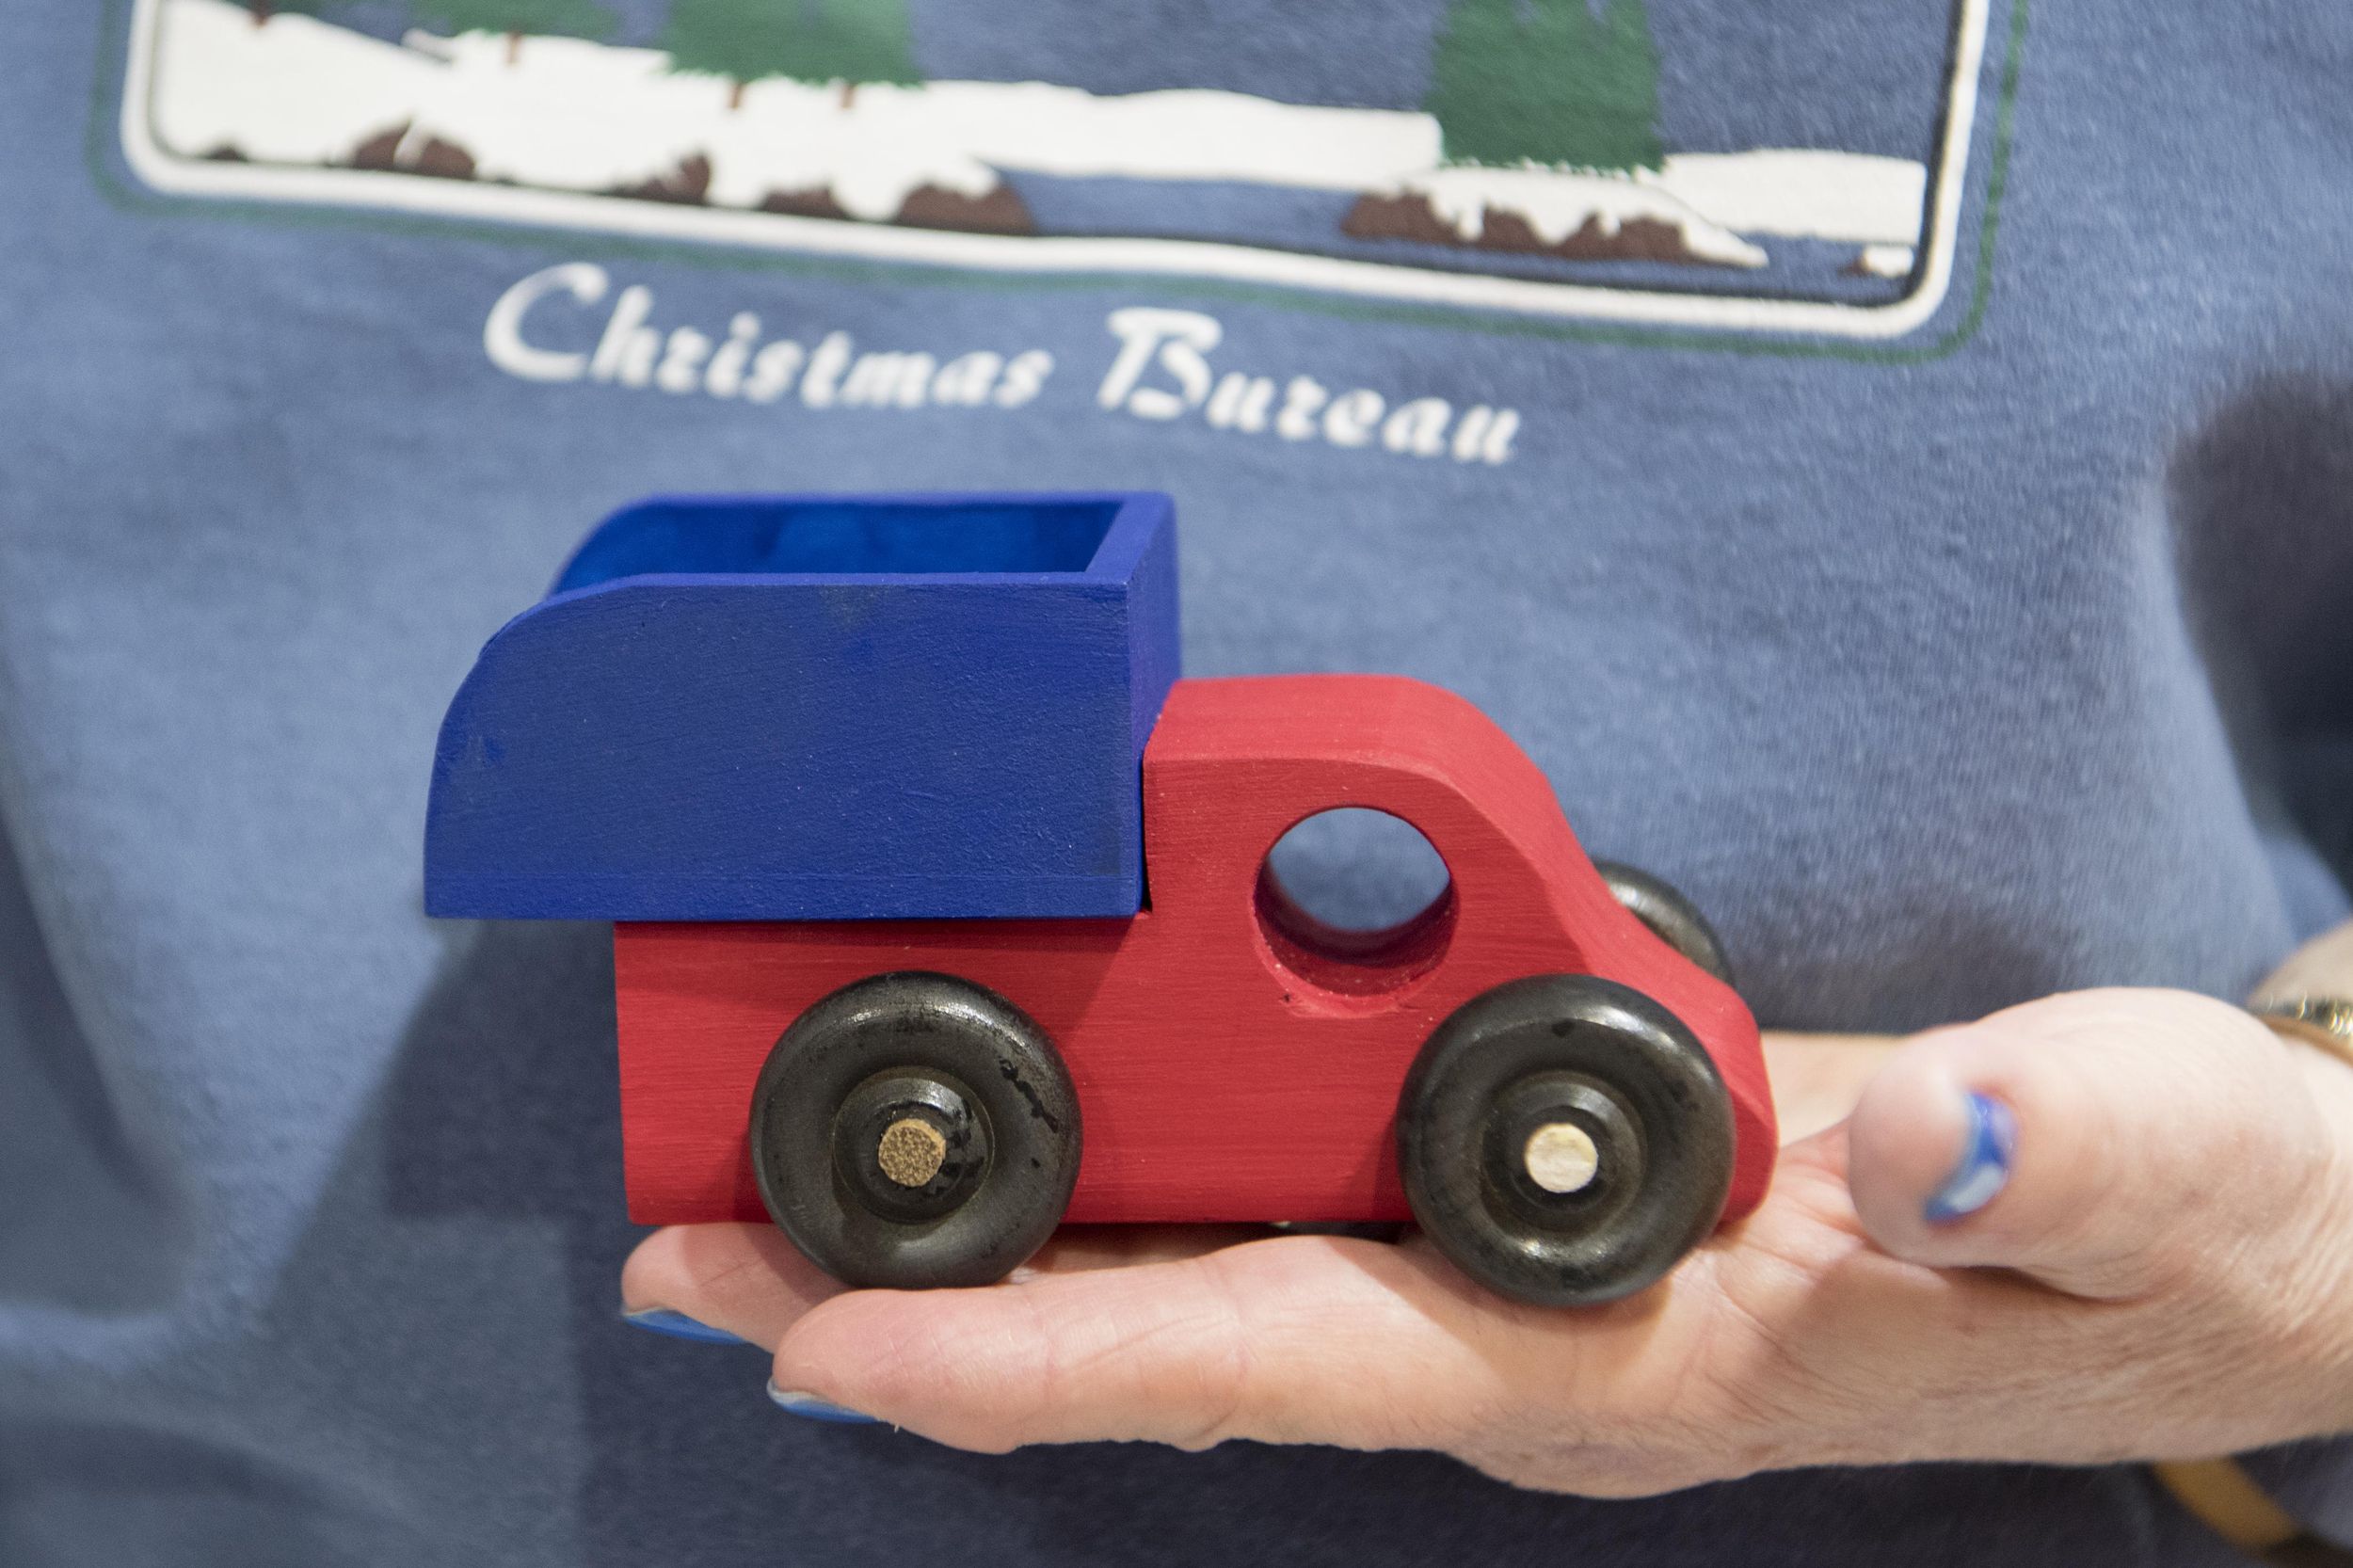 Christmas Bureau seeks woodworkers to make traditional trucks The